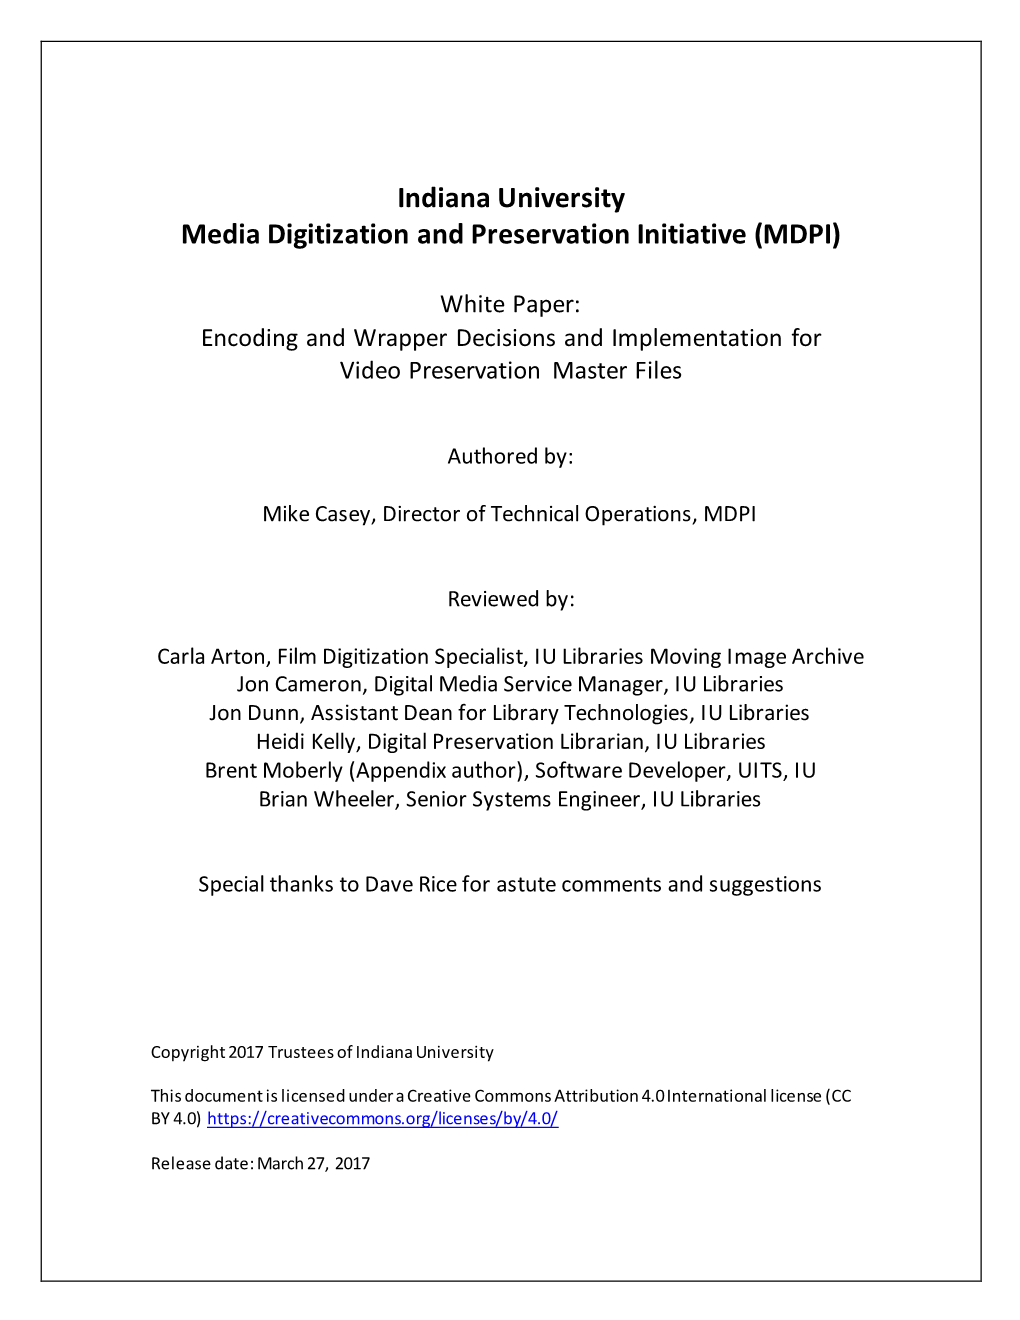 Indiana University Media Digitization and Preservation Initiative (MDPI)